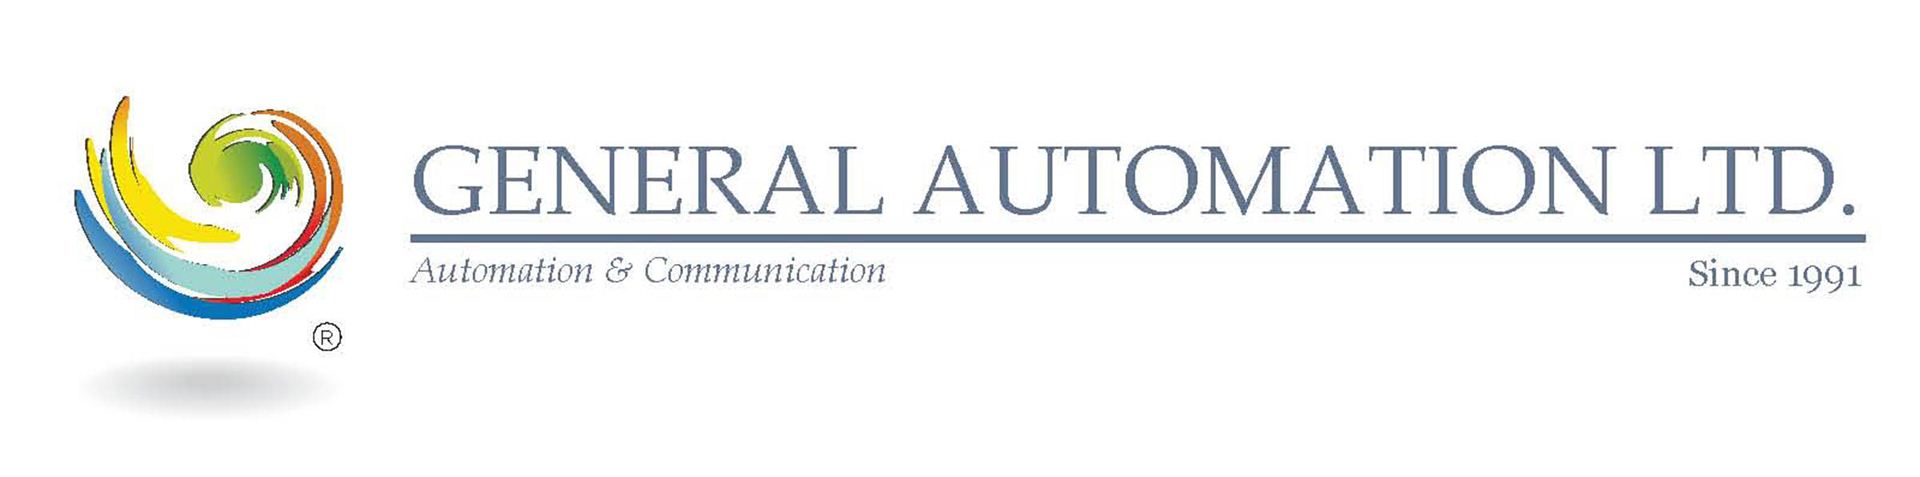 General Automation Ltd.